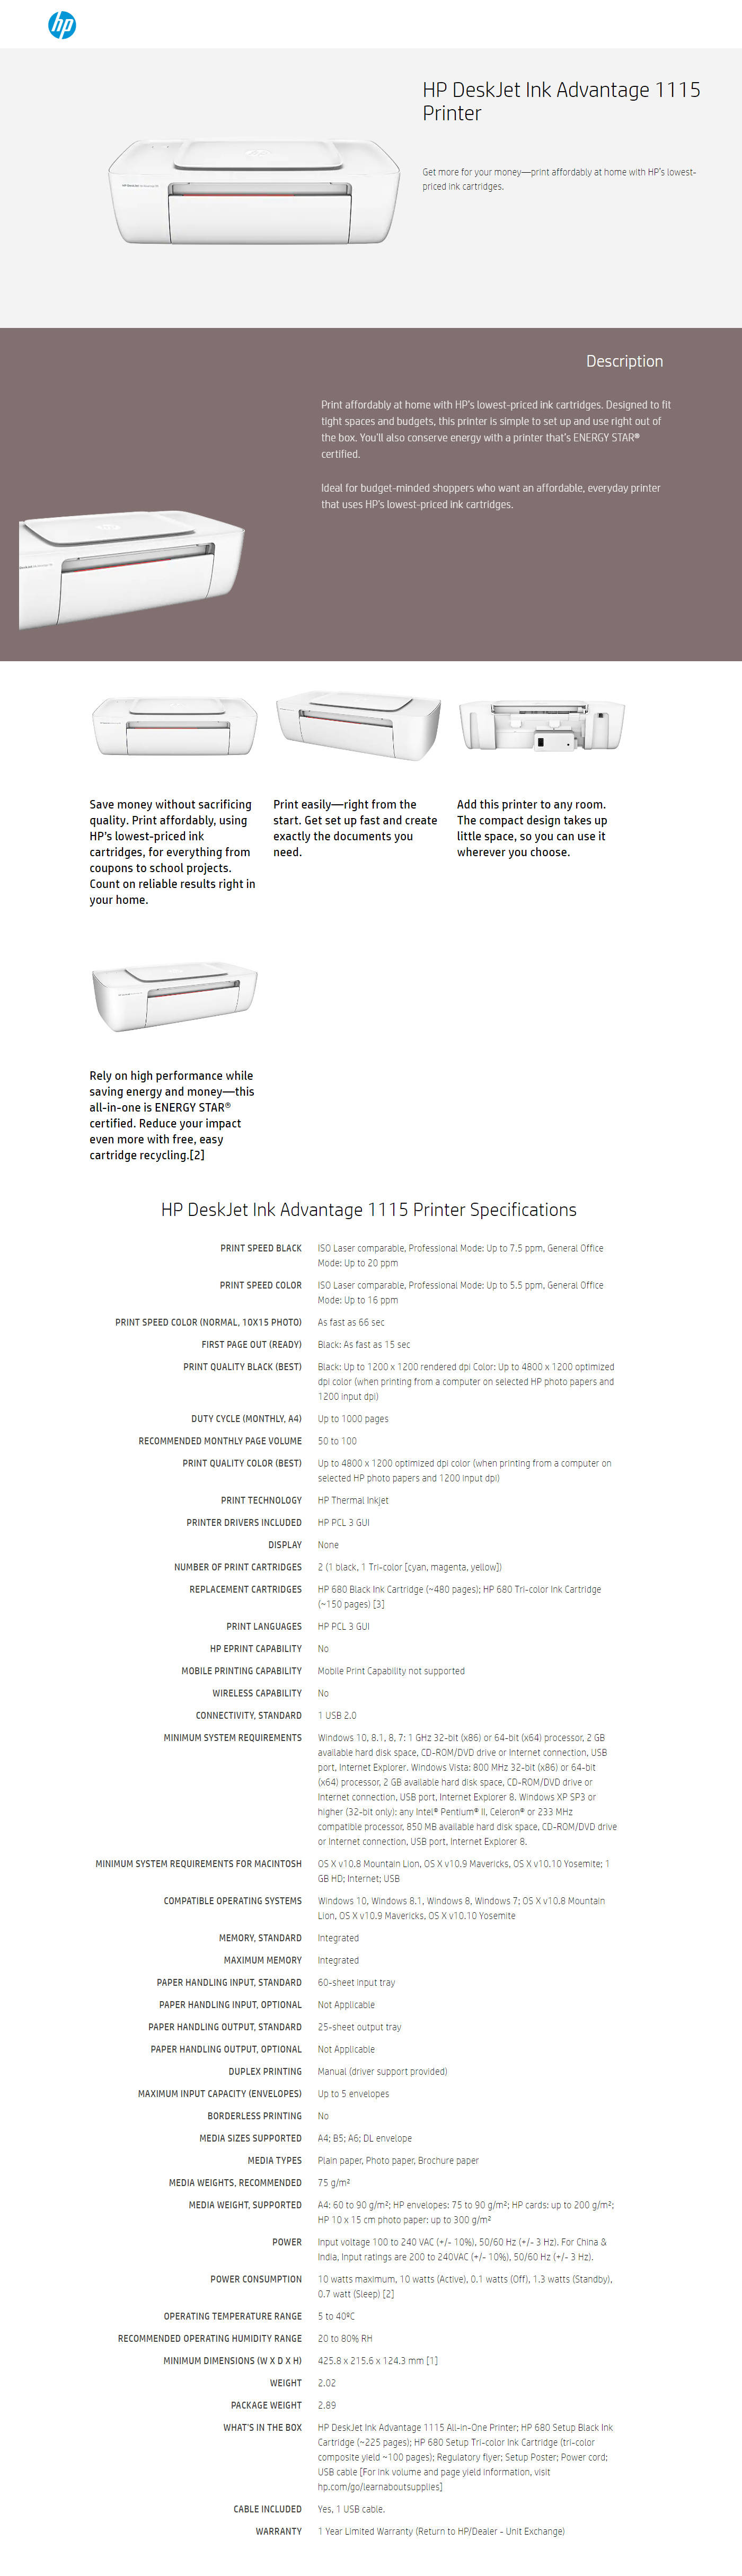 Buy Online HP DeskJet Ink Advantage 1115 Printer (F5S21B)